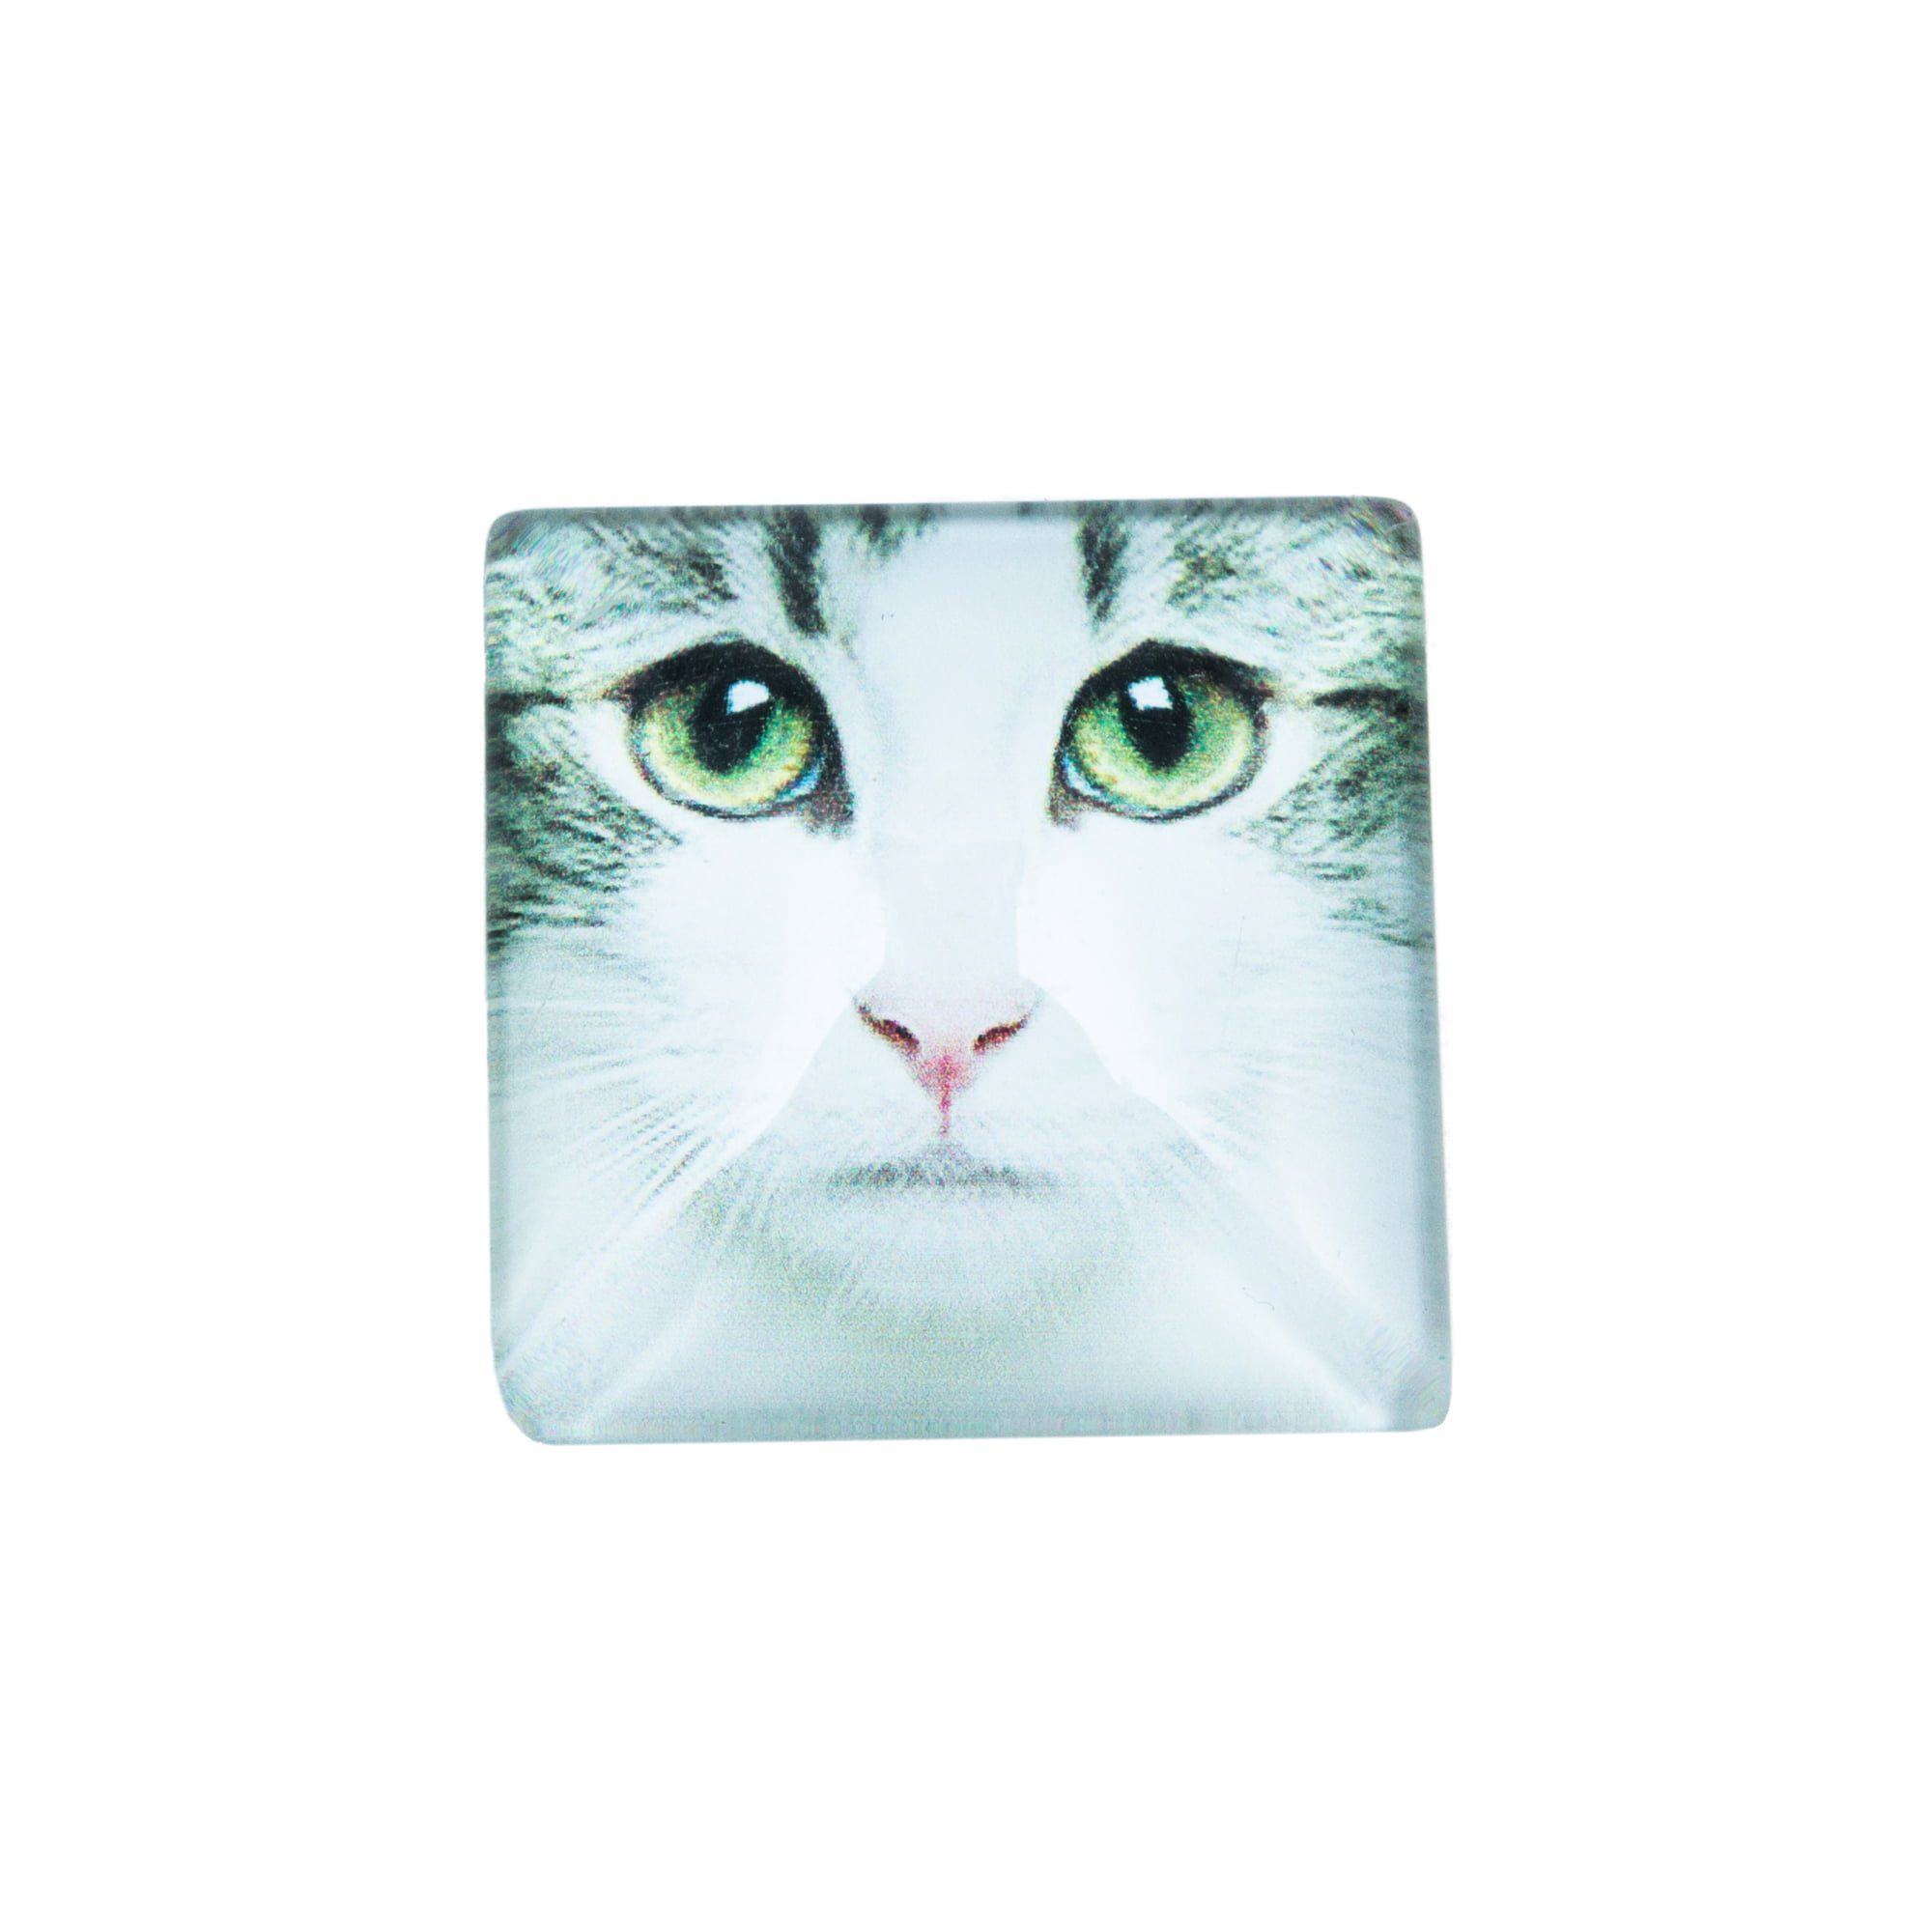 designer kitty pattern Magnet for Sale by danibr0wn